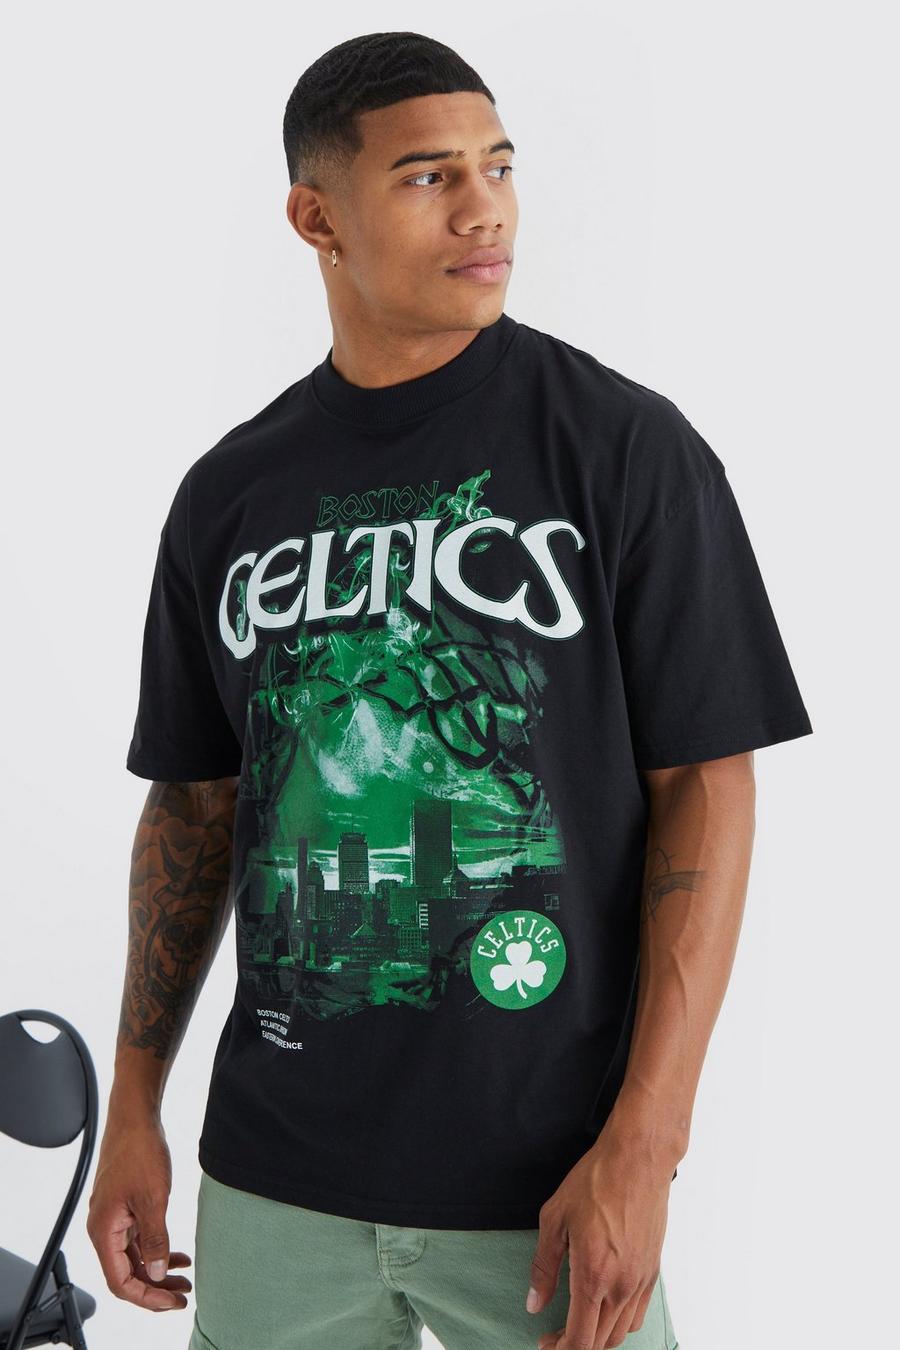 NBA Men's T-Shirt - Black - XL